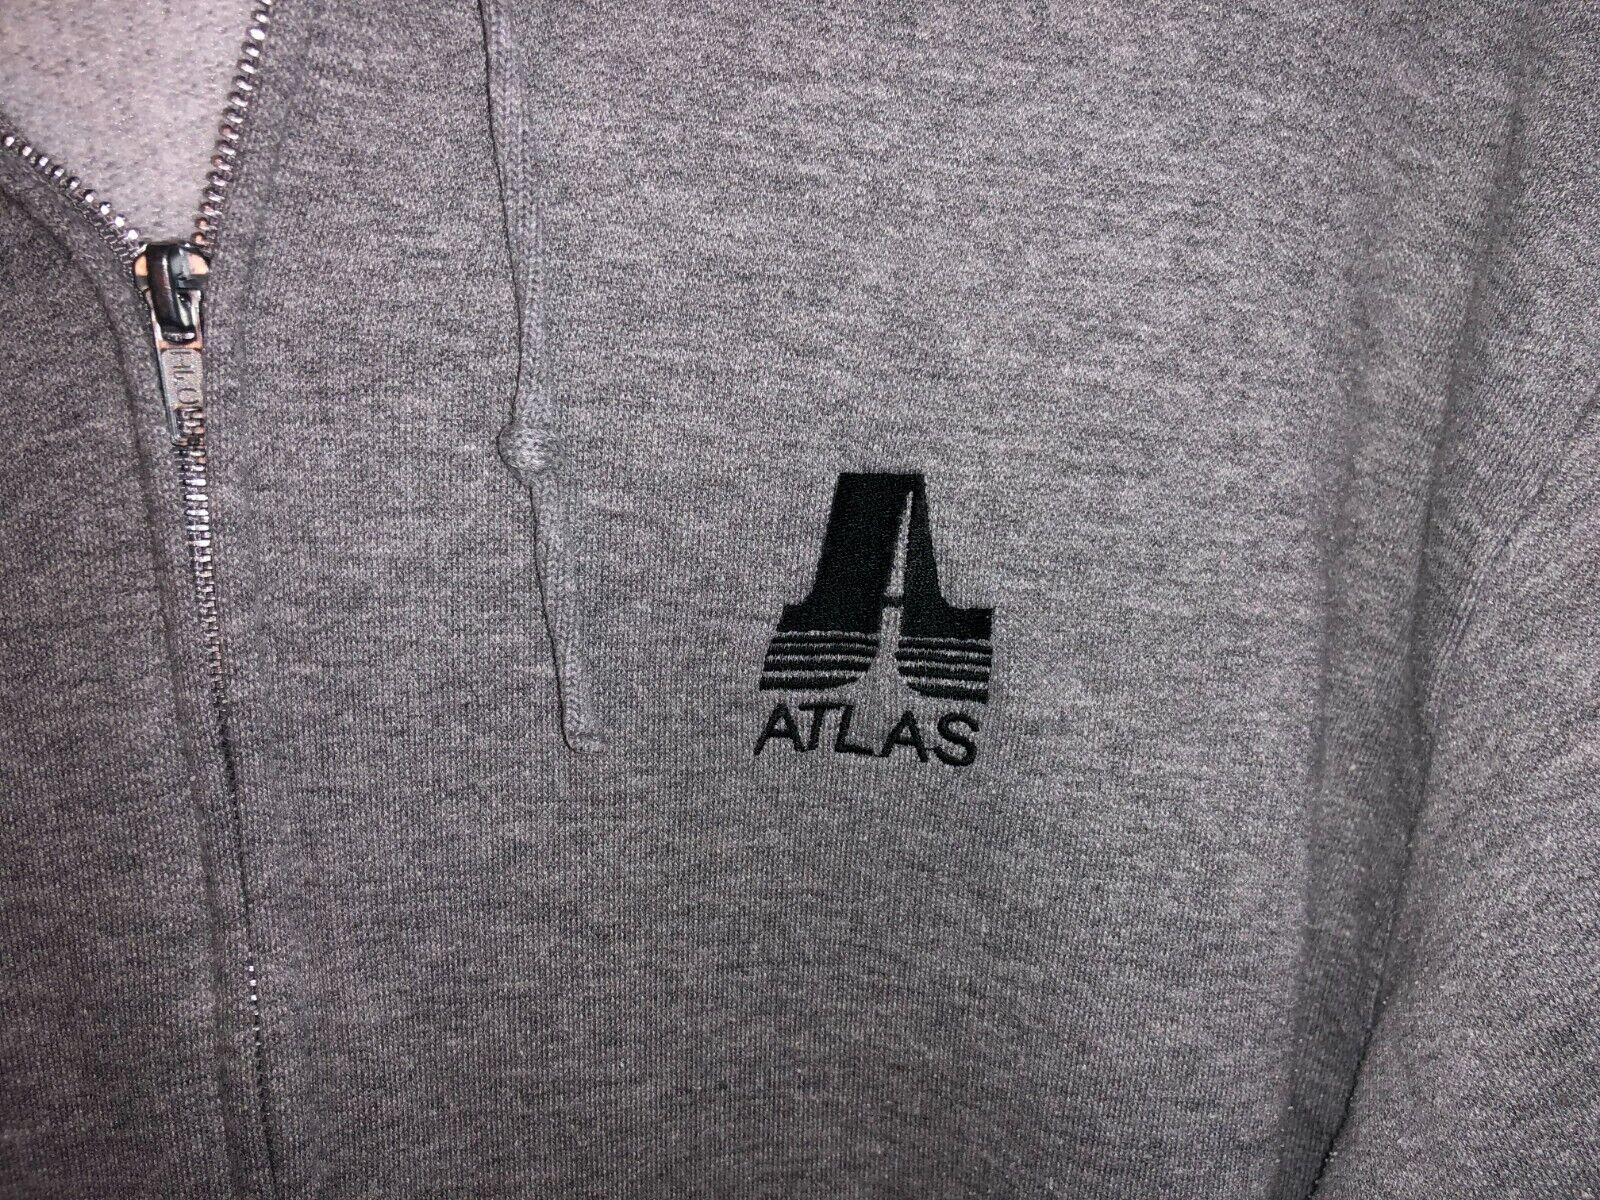 Atlas Space Rocket Nasa Zippered Hoodie Sweat Shirt Medium